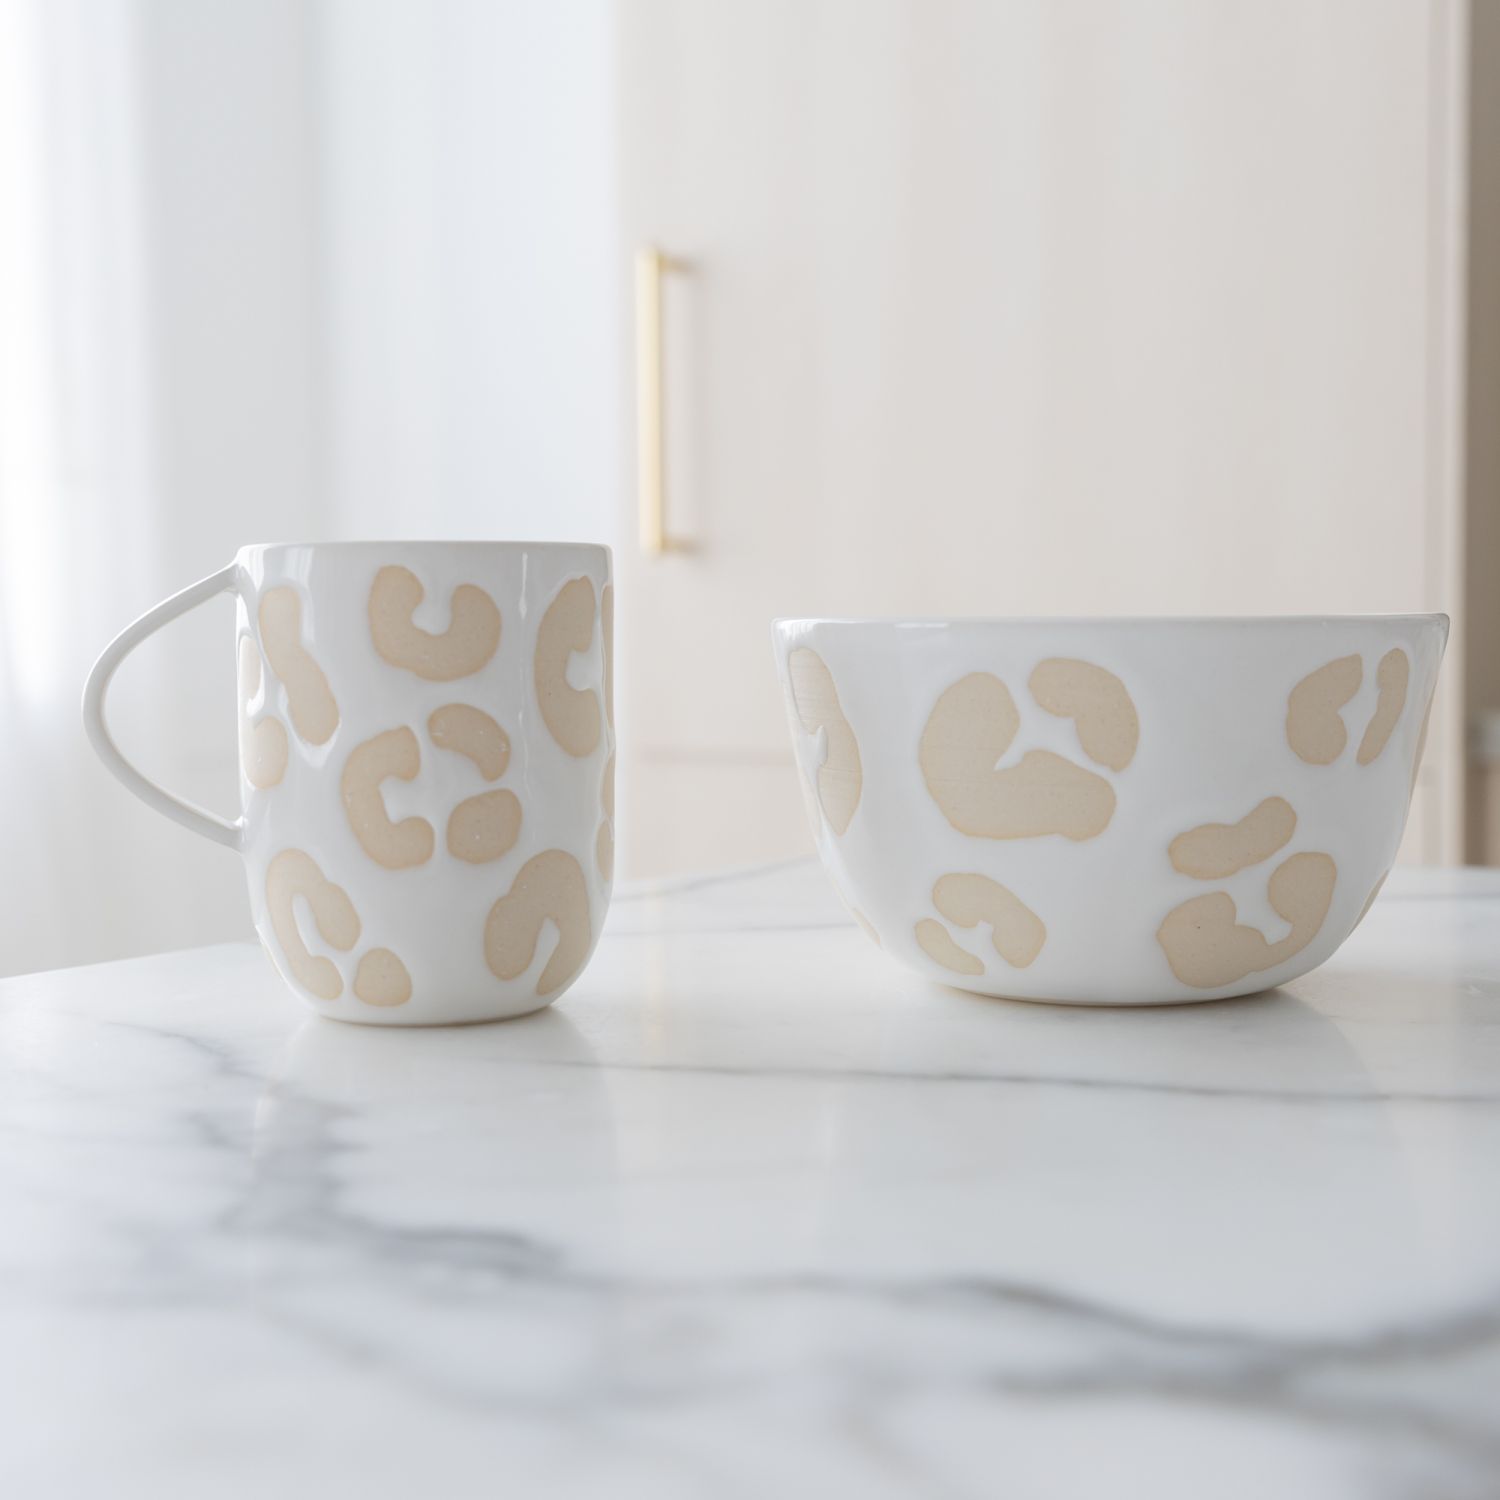 Mima Ceramics: White Print Mug Product Image 2 of 3